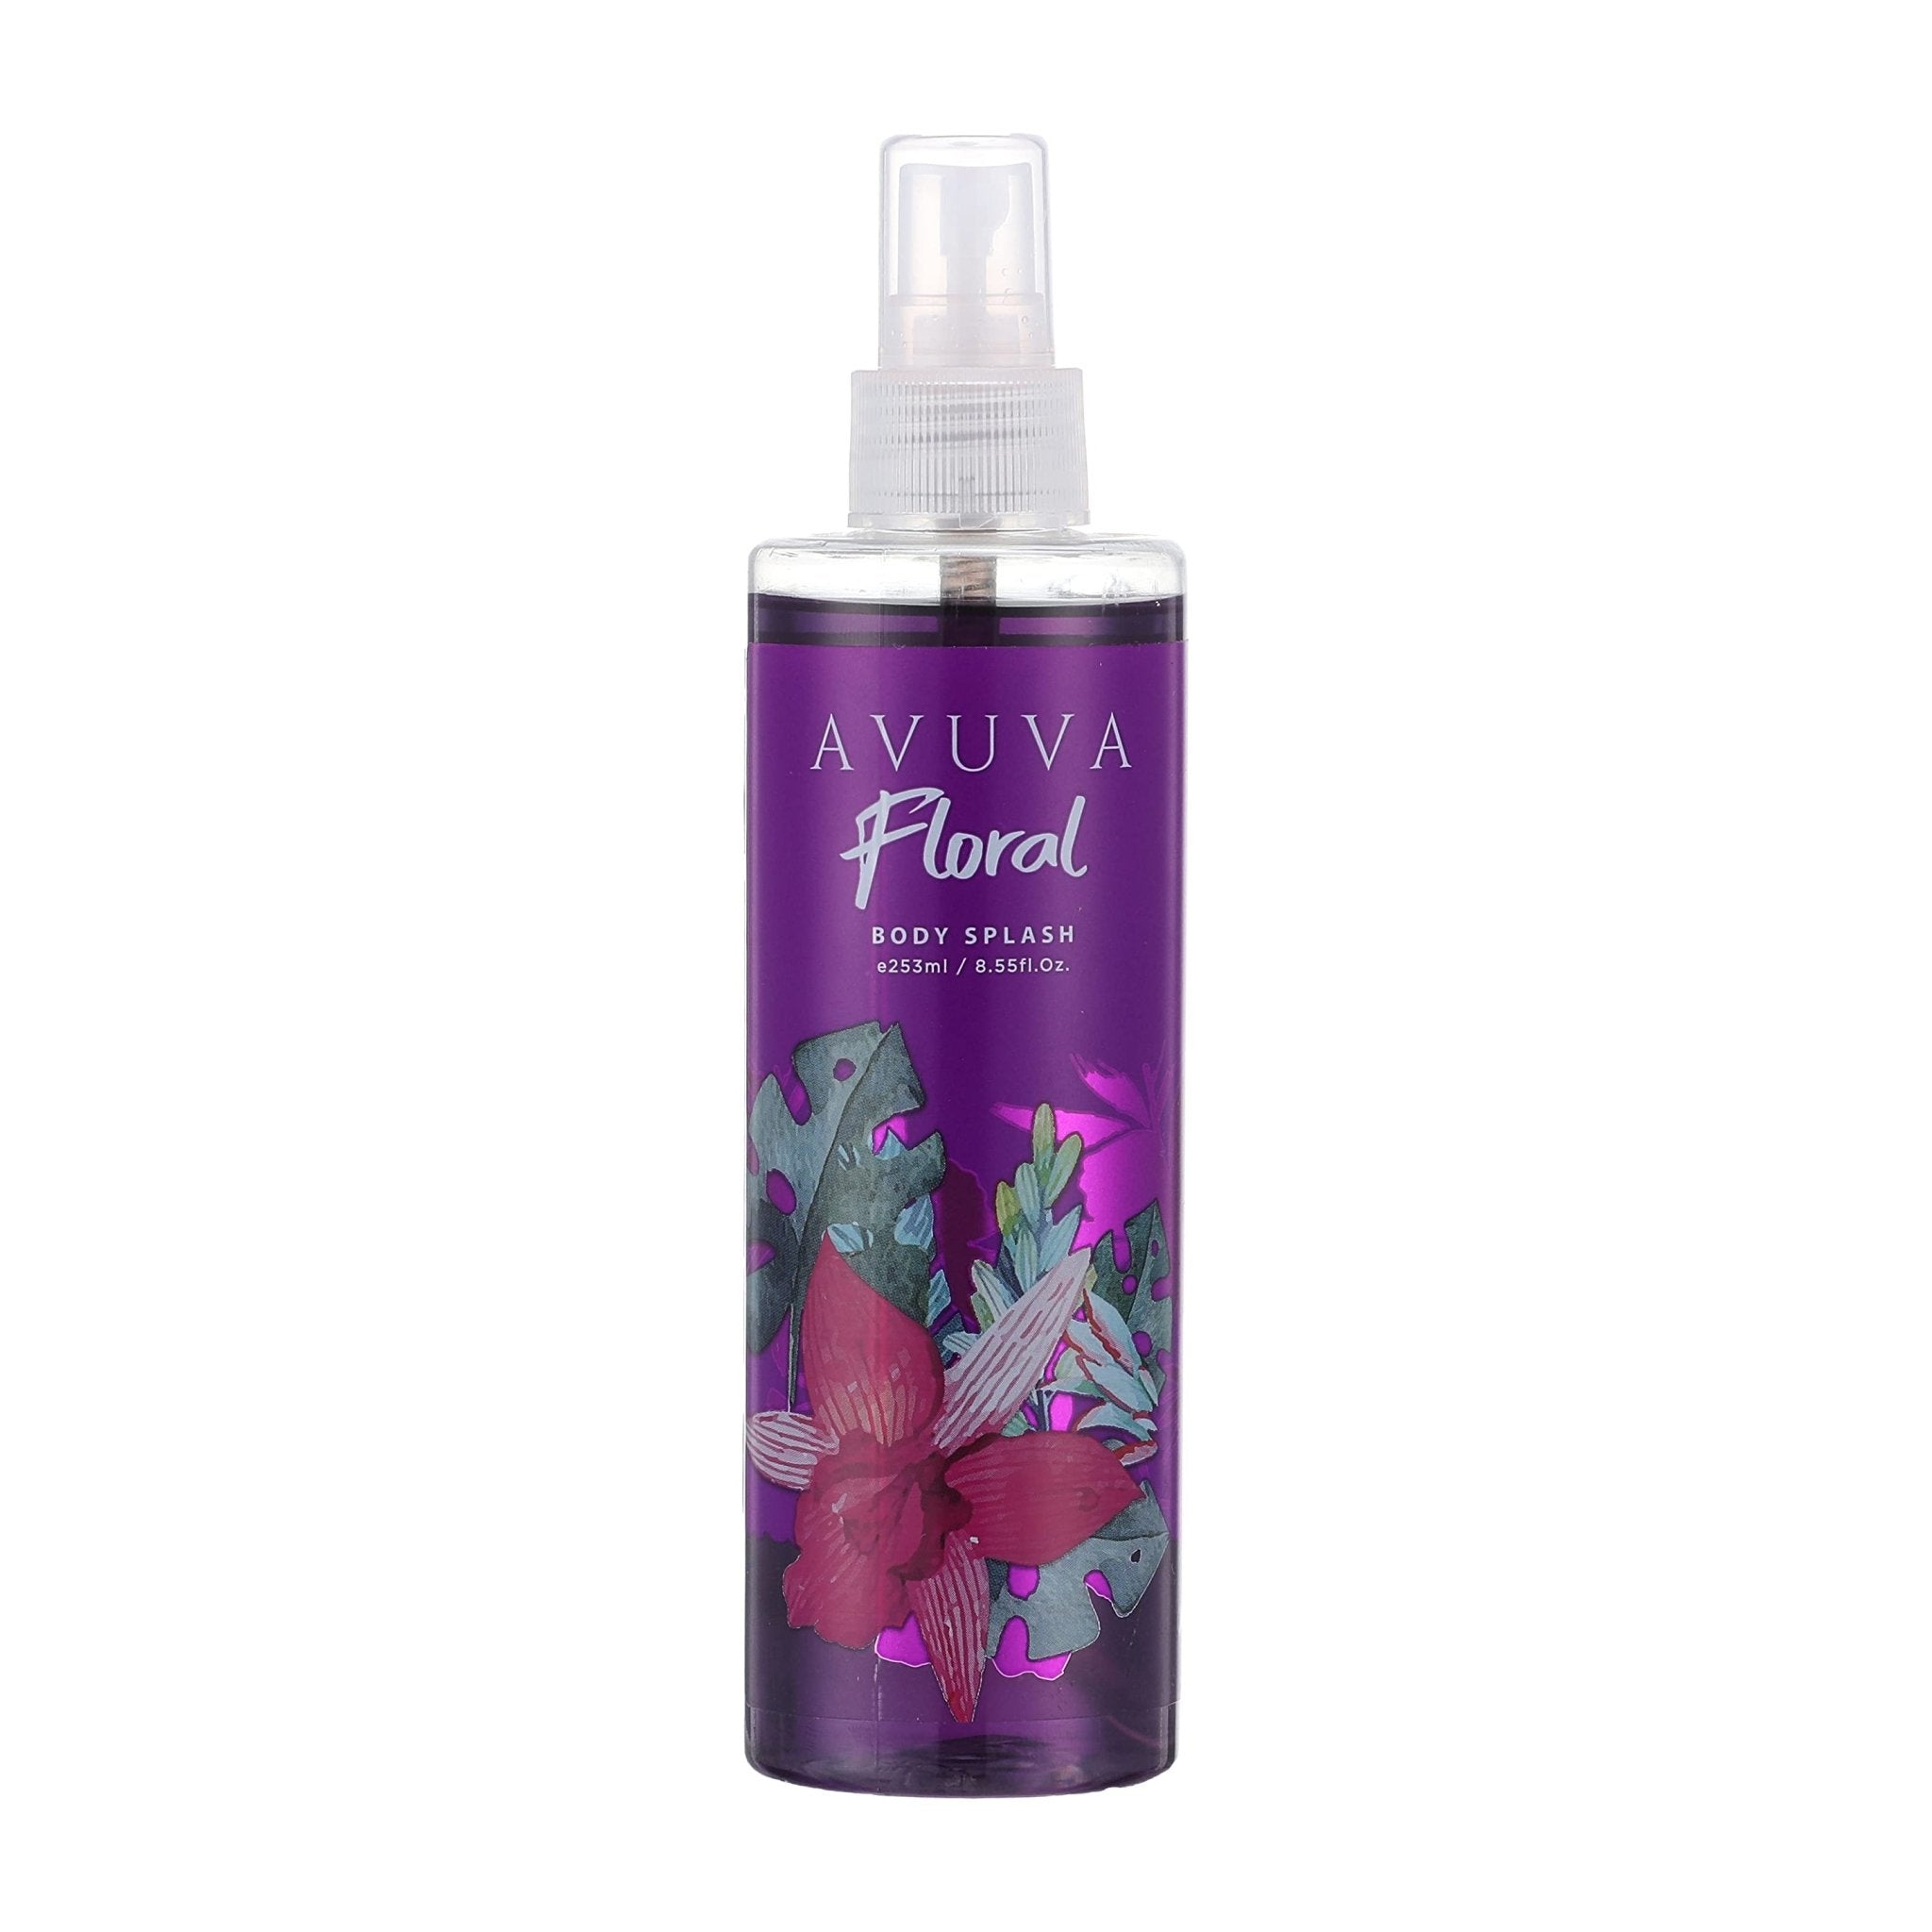 Avuva Floral Body Splash - 253ml - Bloom Pharmacy